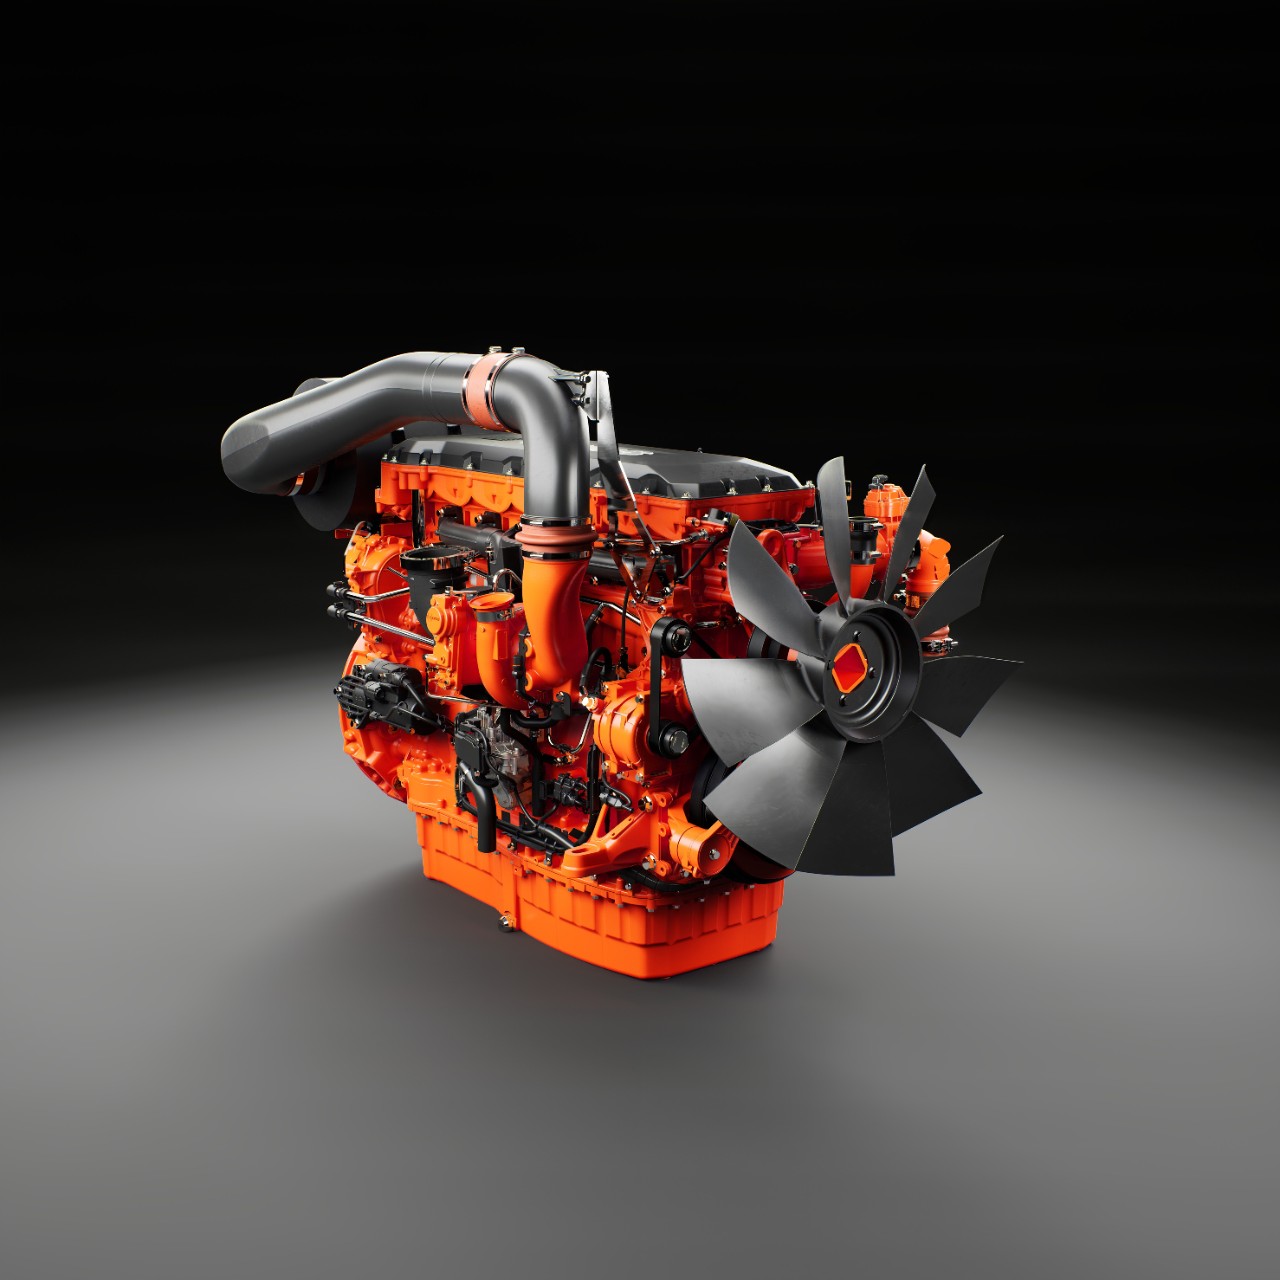 Scania új ipari motorcsalád